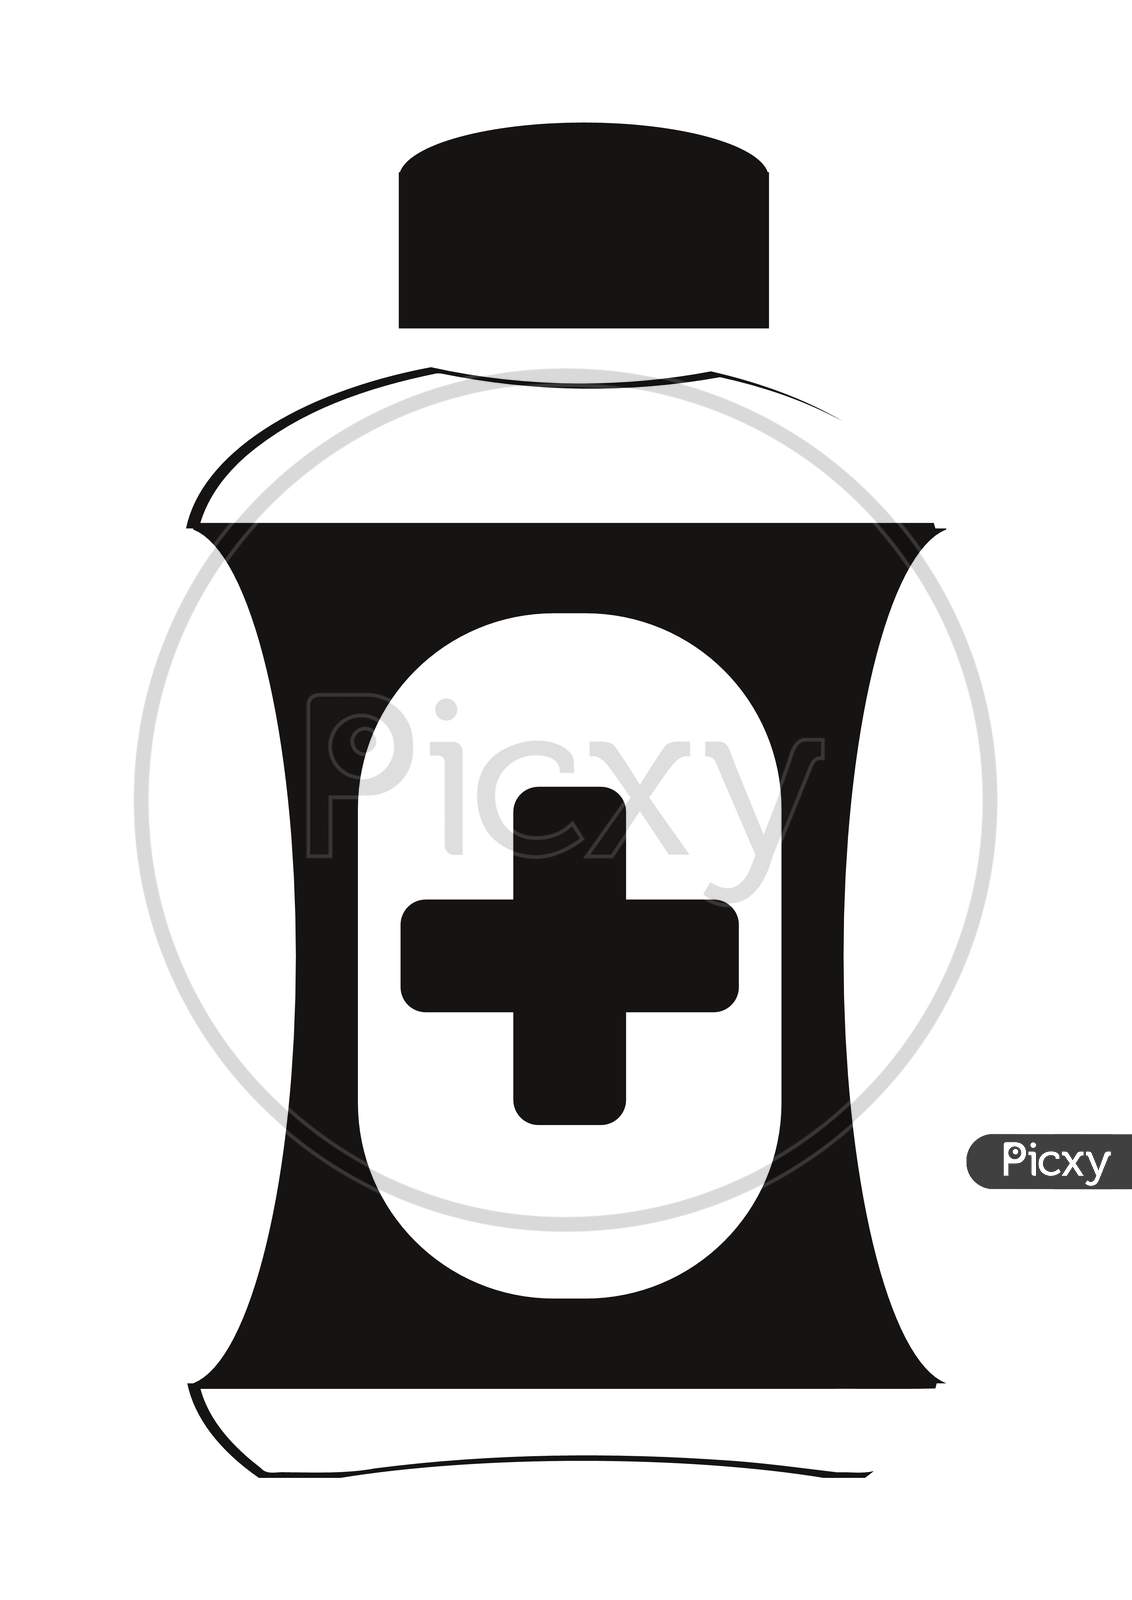 Image Of A Black Color, Health Care, Medical Bottle Graphic Design Having In Plus Symbol